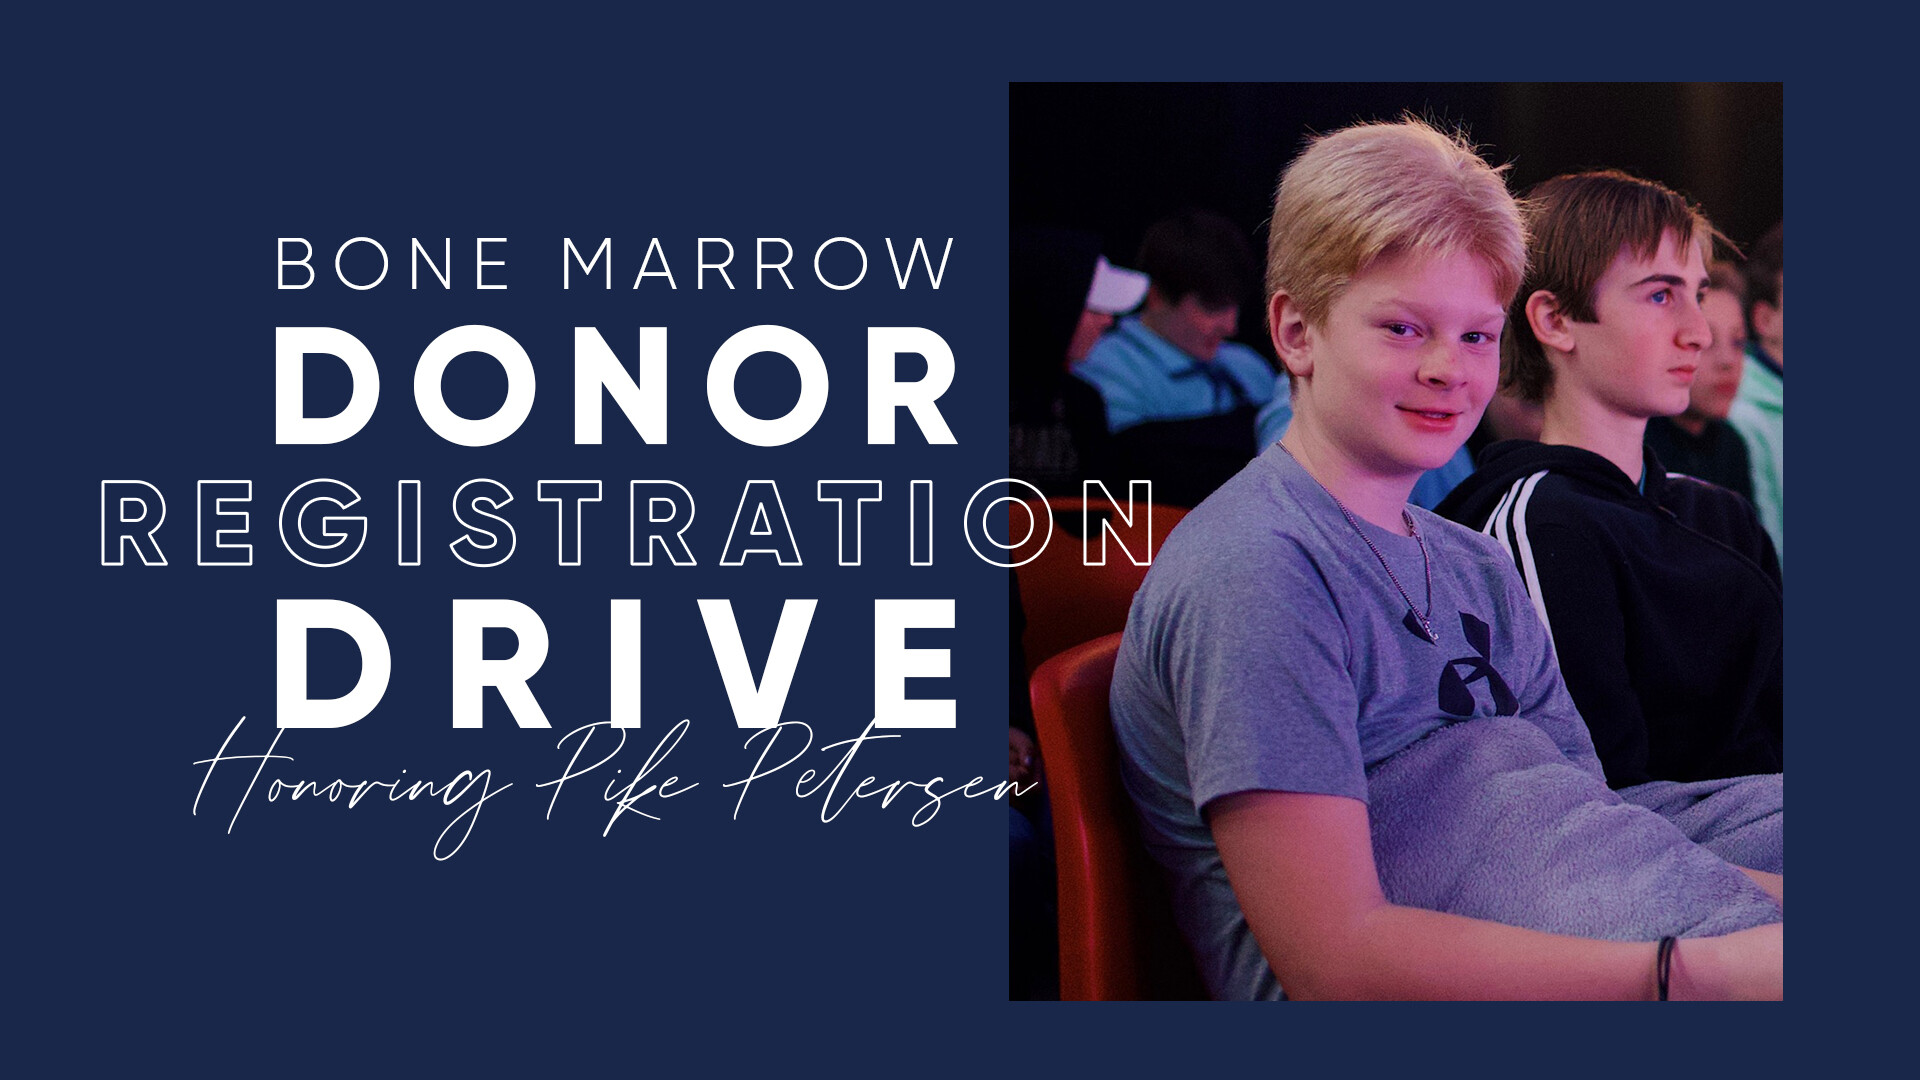 Bone Marrow Donor Registration Drive honoring Pike Petersen